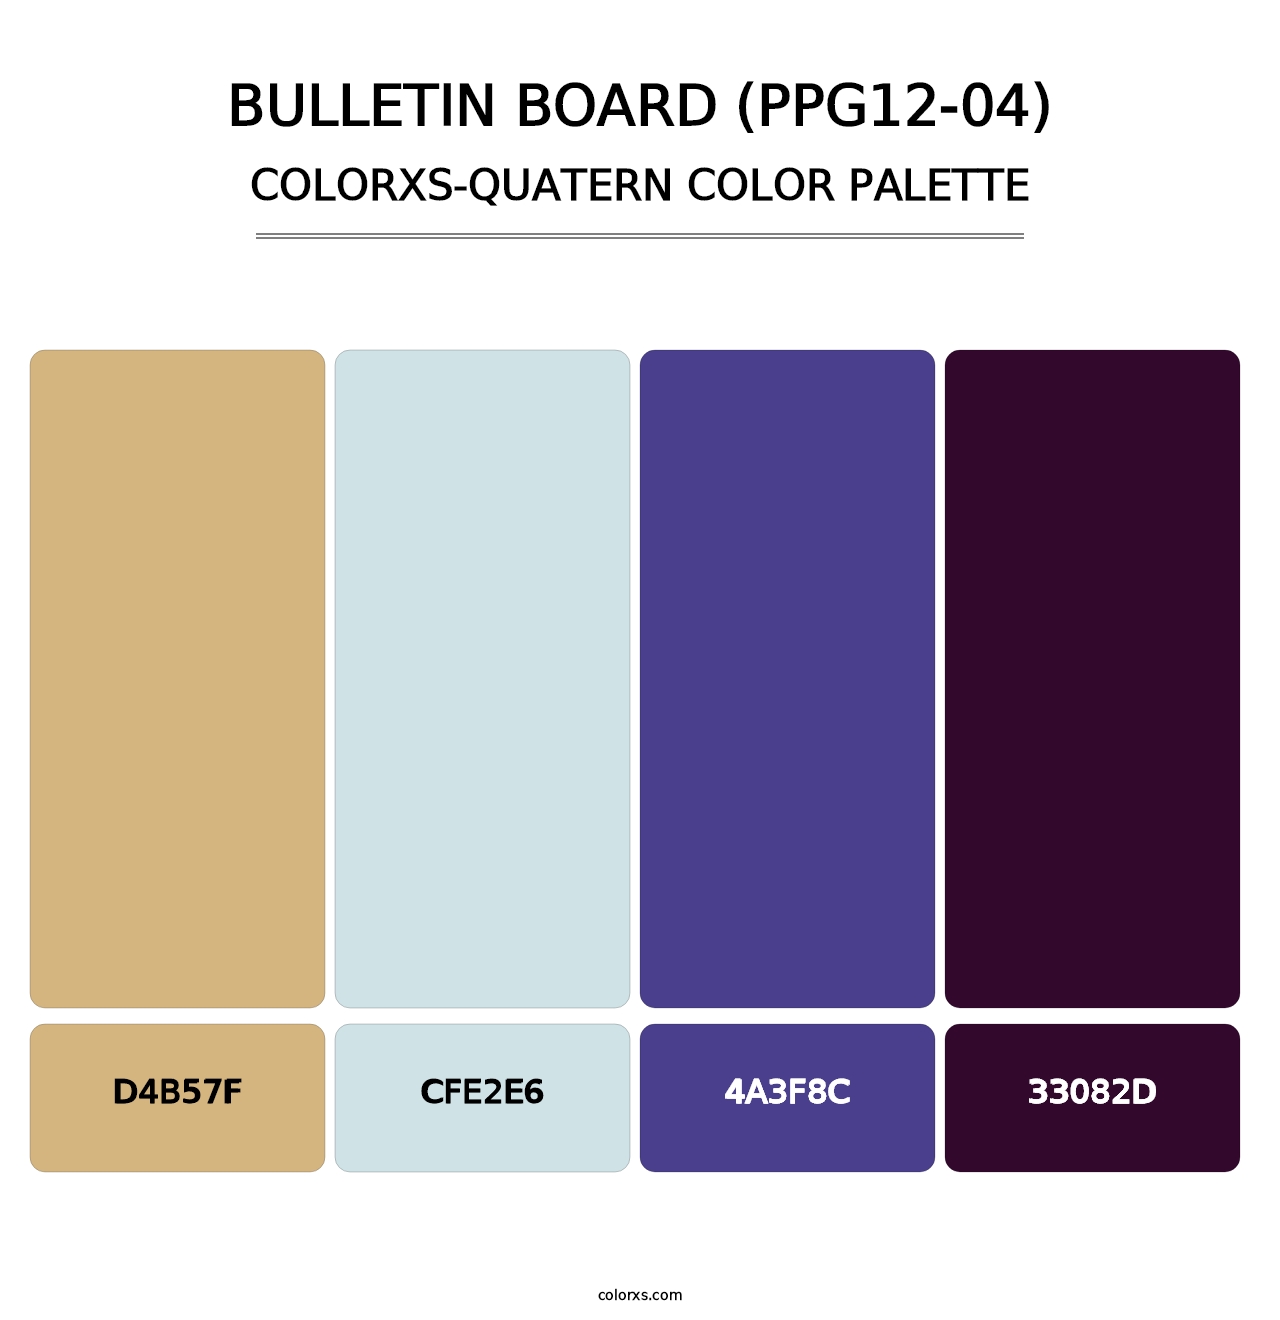 Bulletin Board (PPG12-04) - Colorxs Quatern Palette